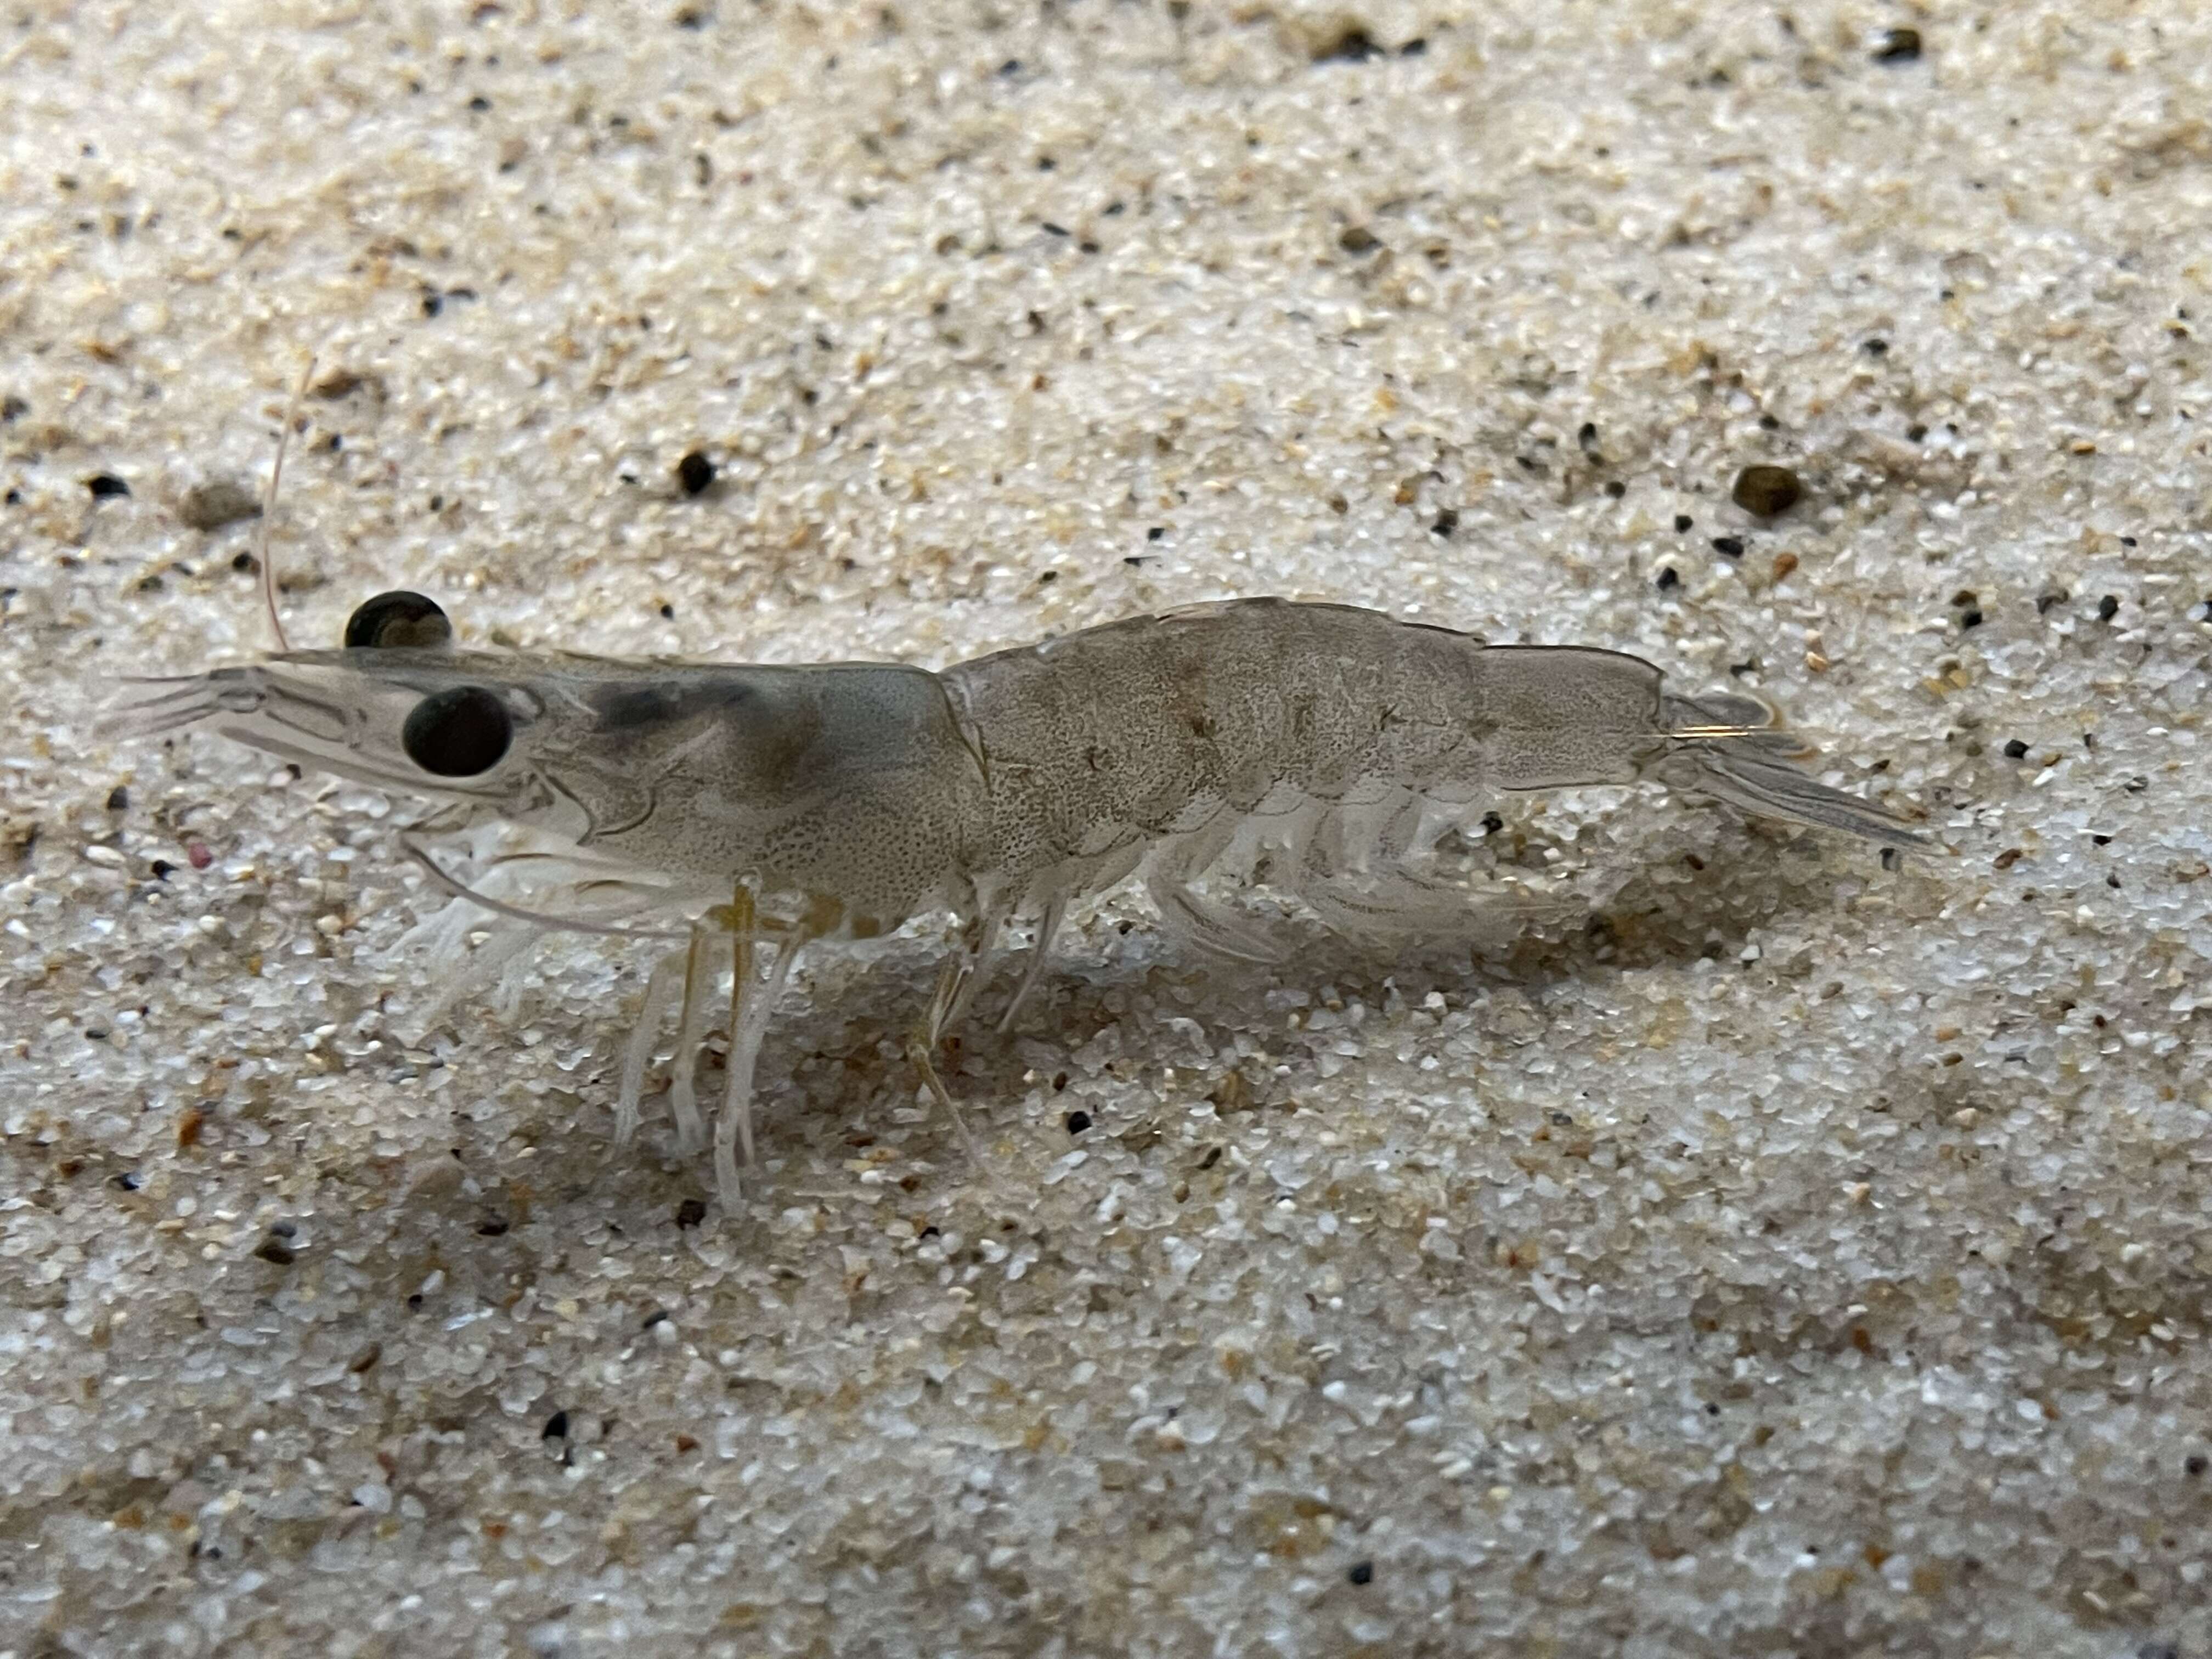 Image of greasyback shrimp